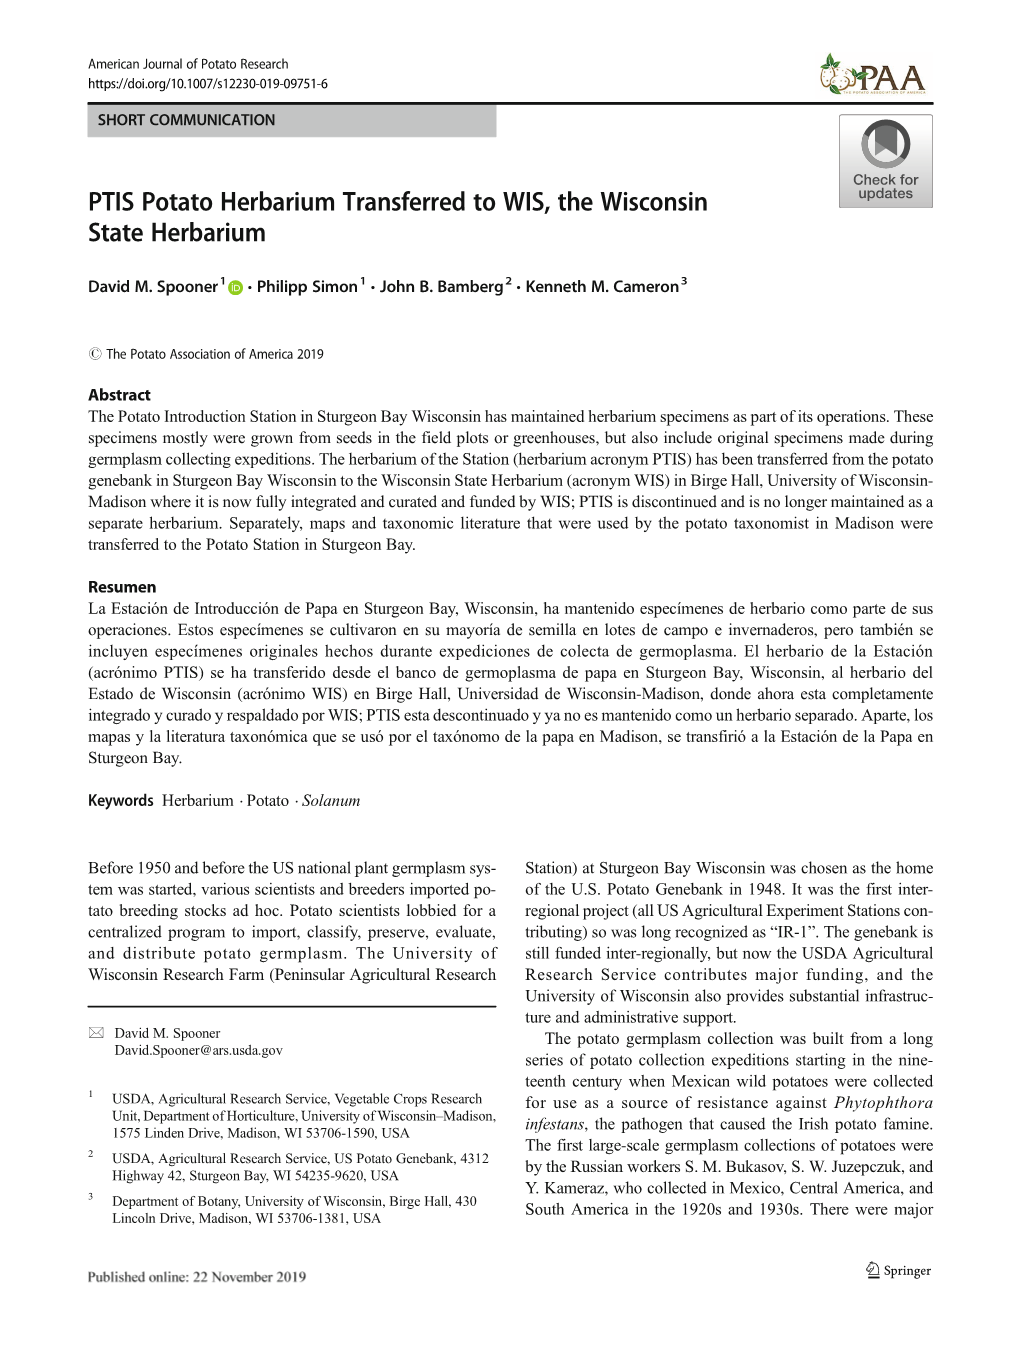 PTIS Potato Herbarium Transferred to WIS, the Wisconsin State Herbarium